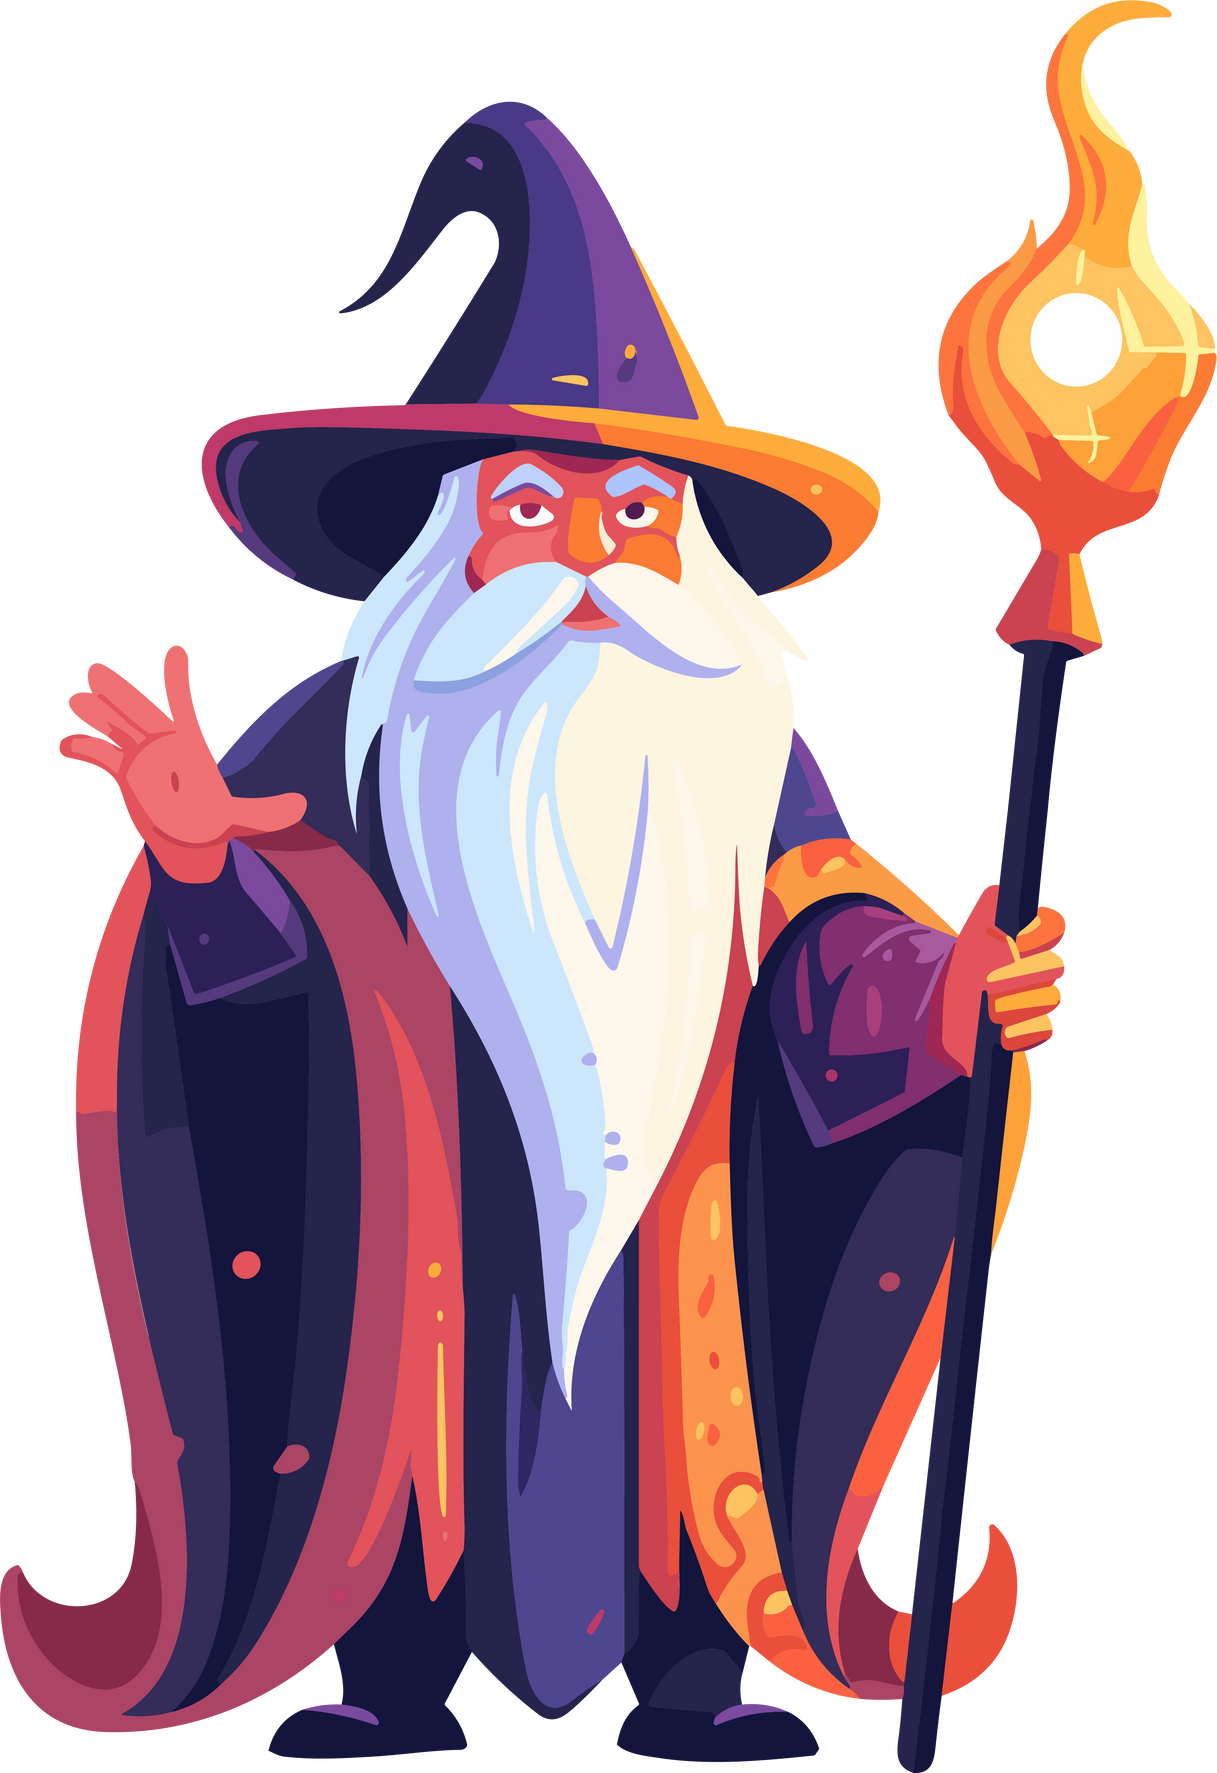 Wizard Holding Staff Illustration